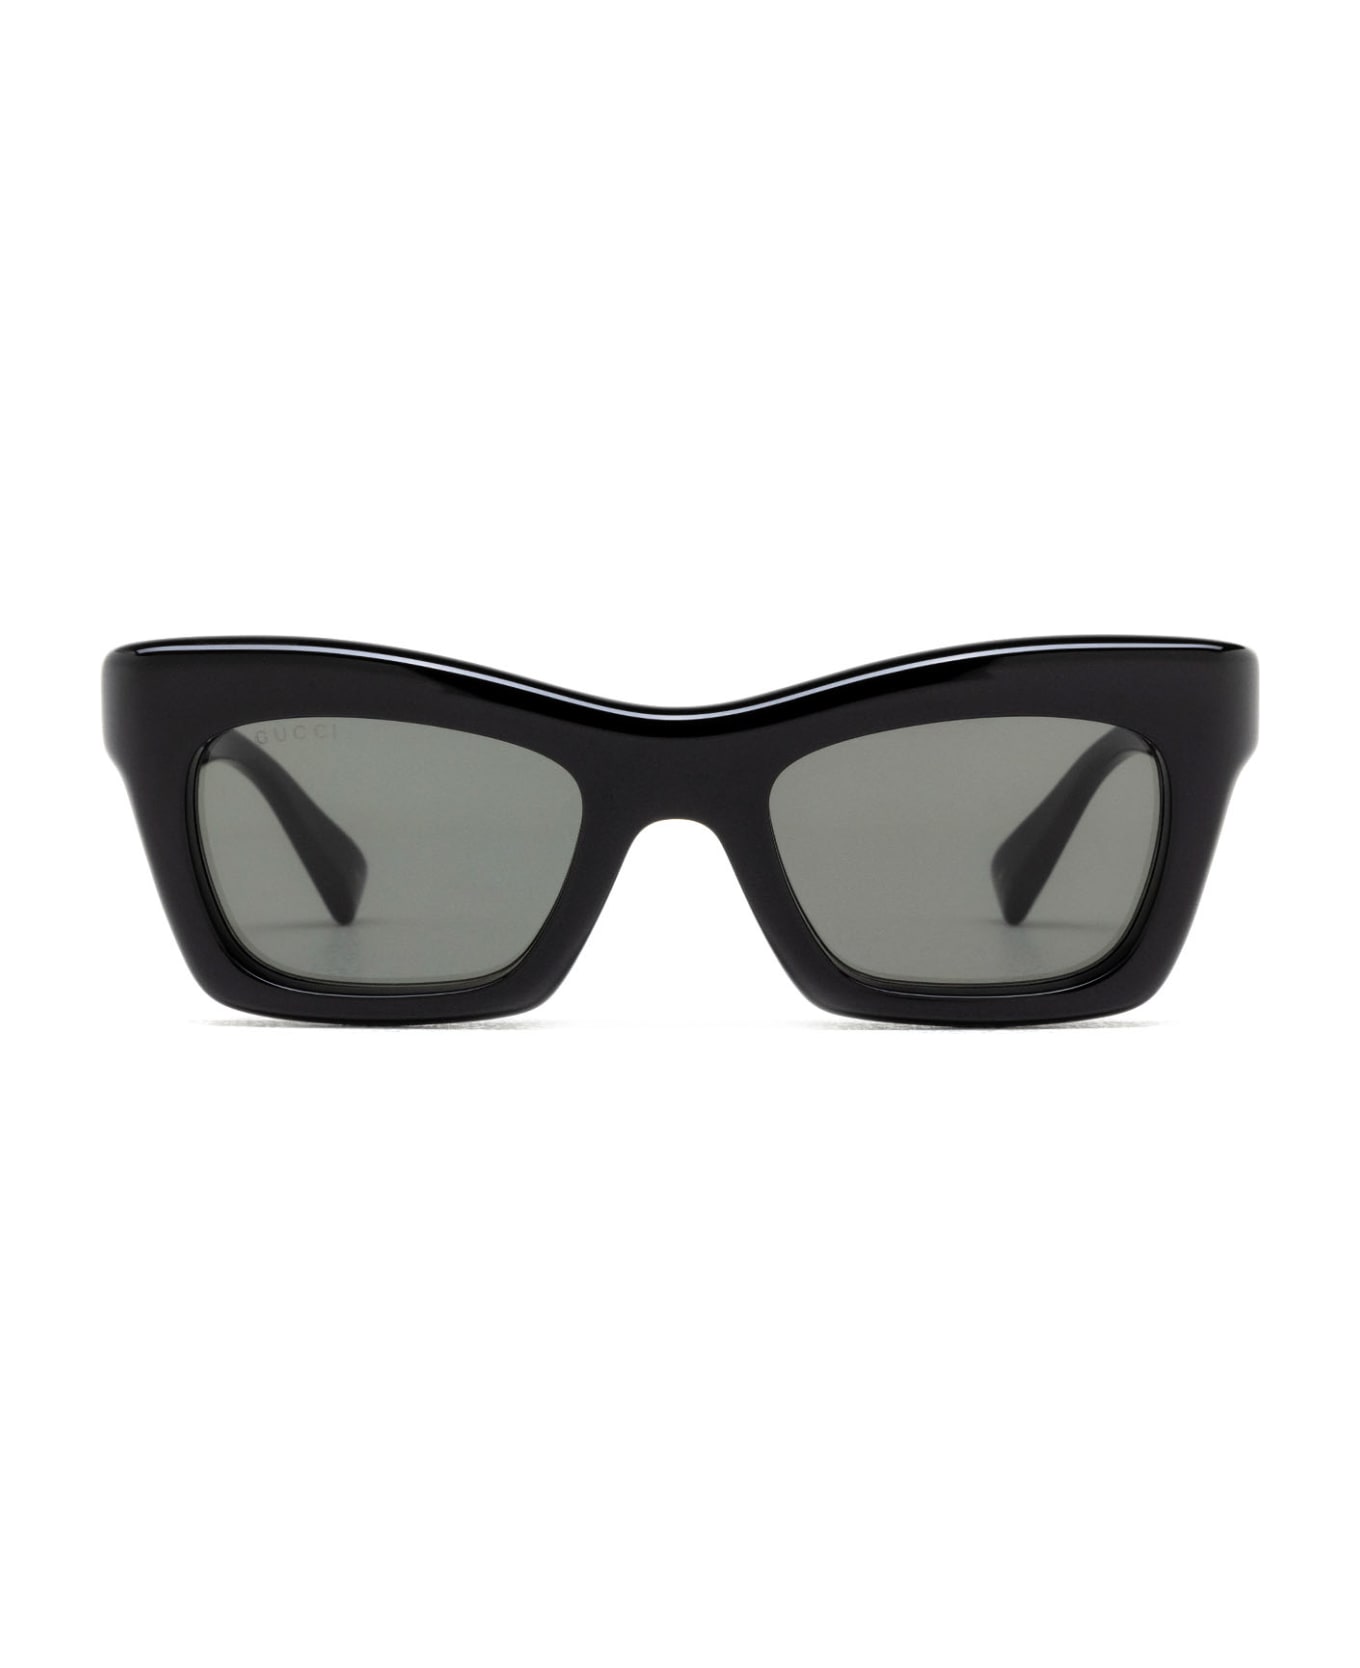 Gucci Eyewear Gg1773s Black Sunglasses - Black